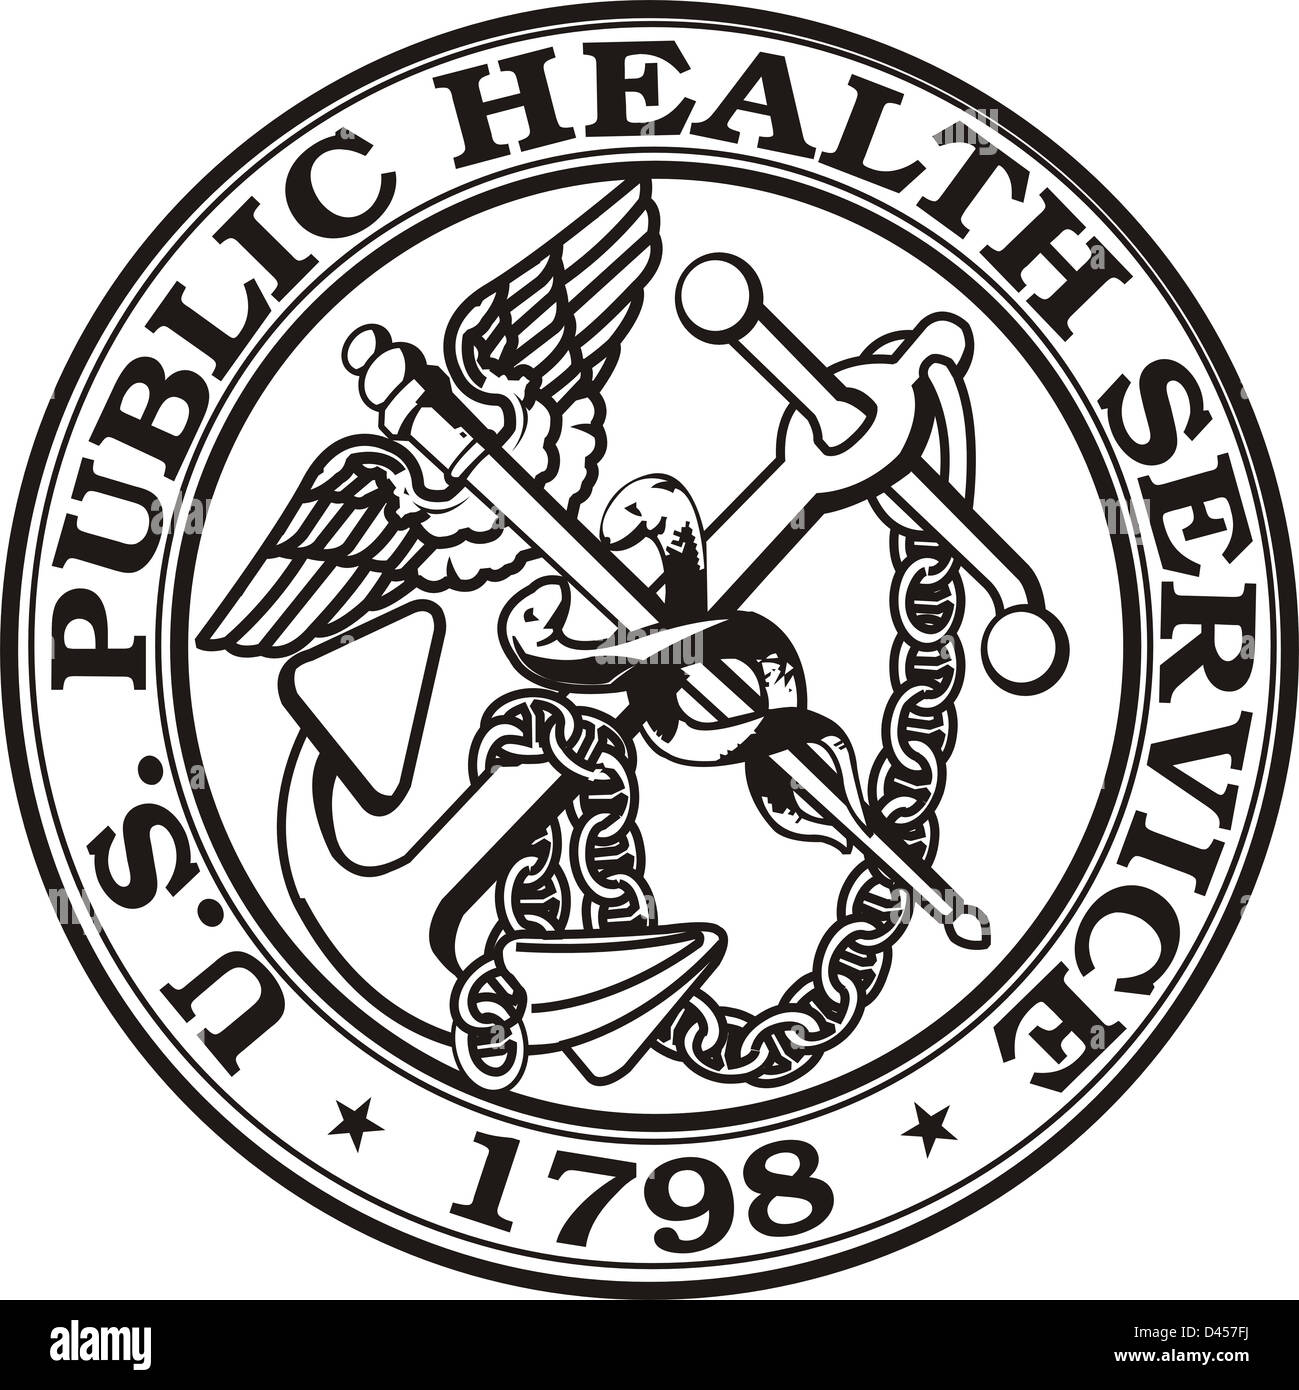 United States Public Health Service Siegel Stockfoto